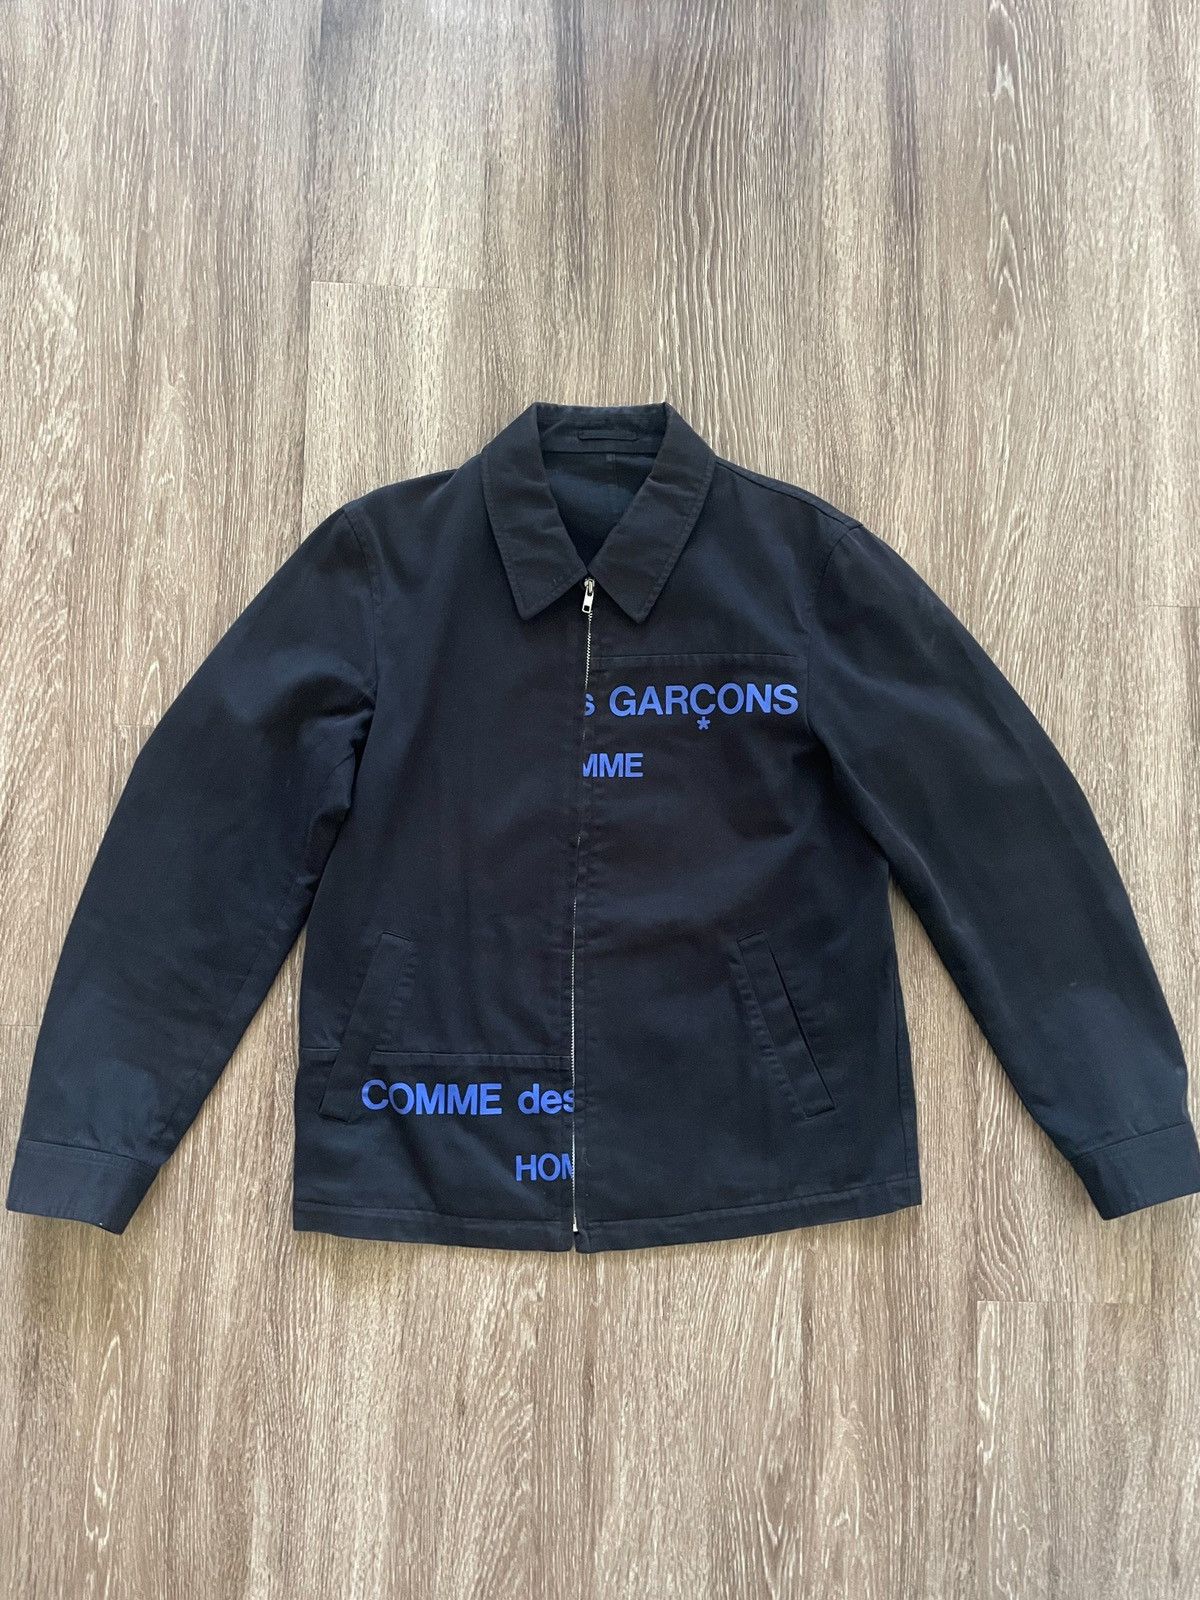 Comme Des Garcons Homme Plus Split Logo Work Jacket | Grailed